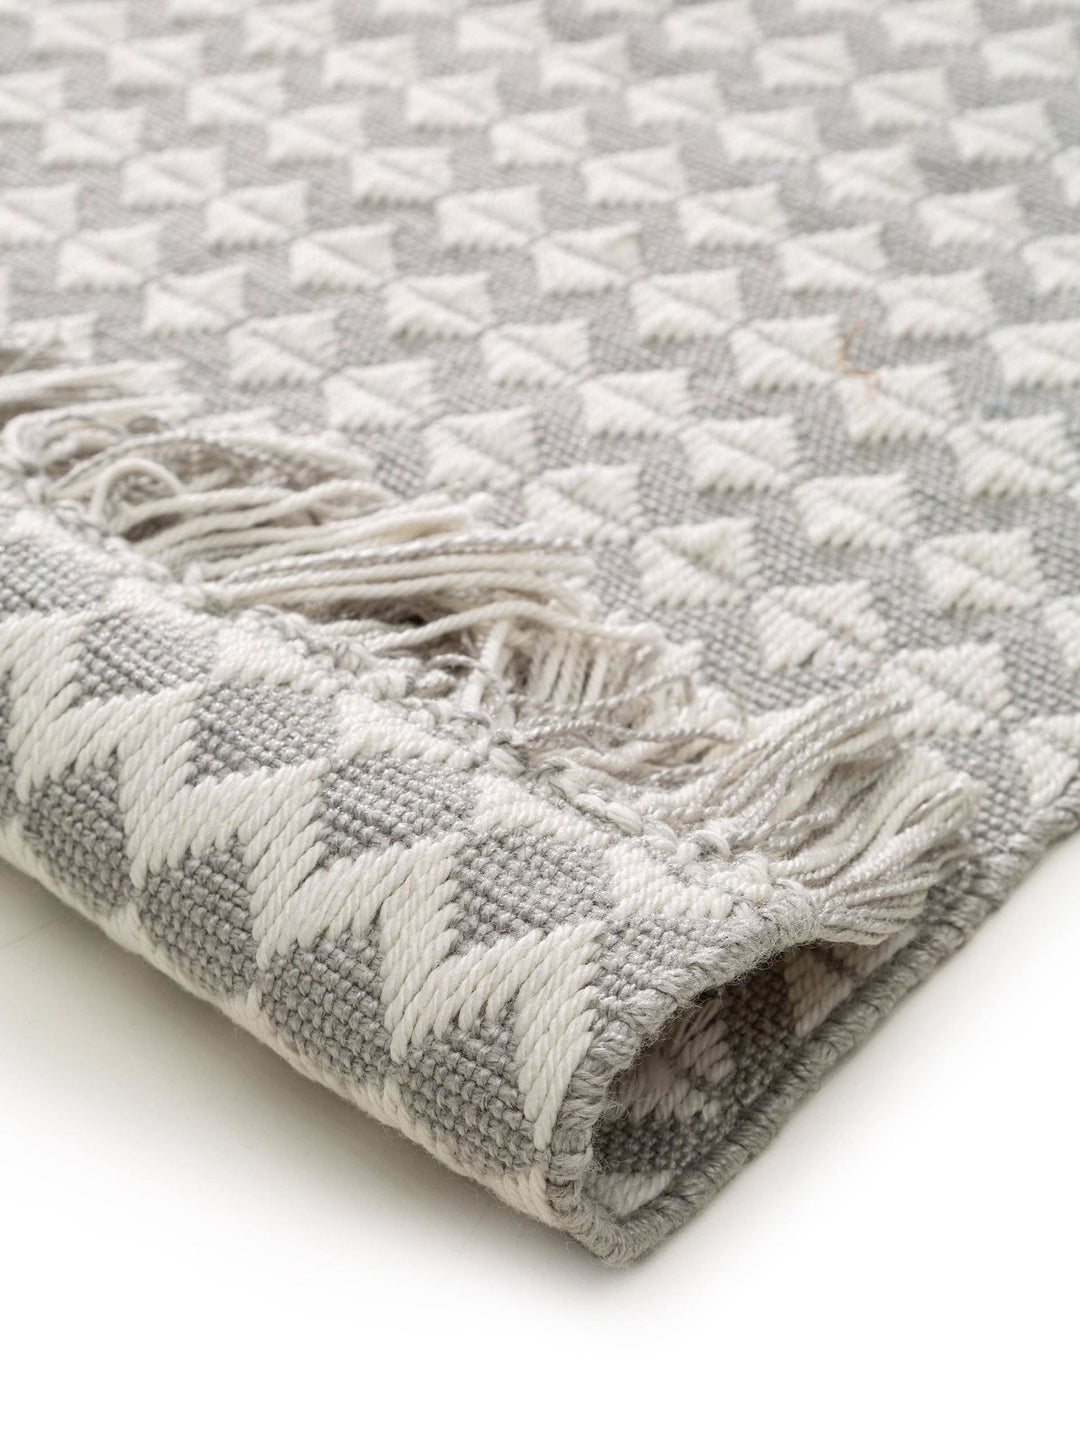 Teppich aus recyceltem Material Morty Grau - benuta PLUS - RugDreams®